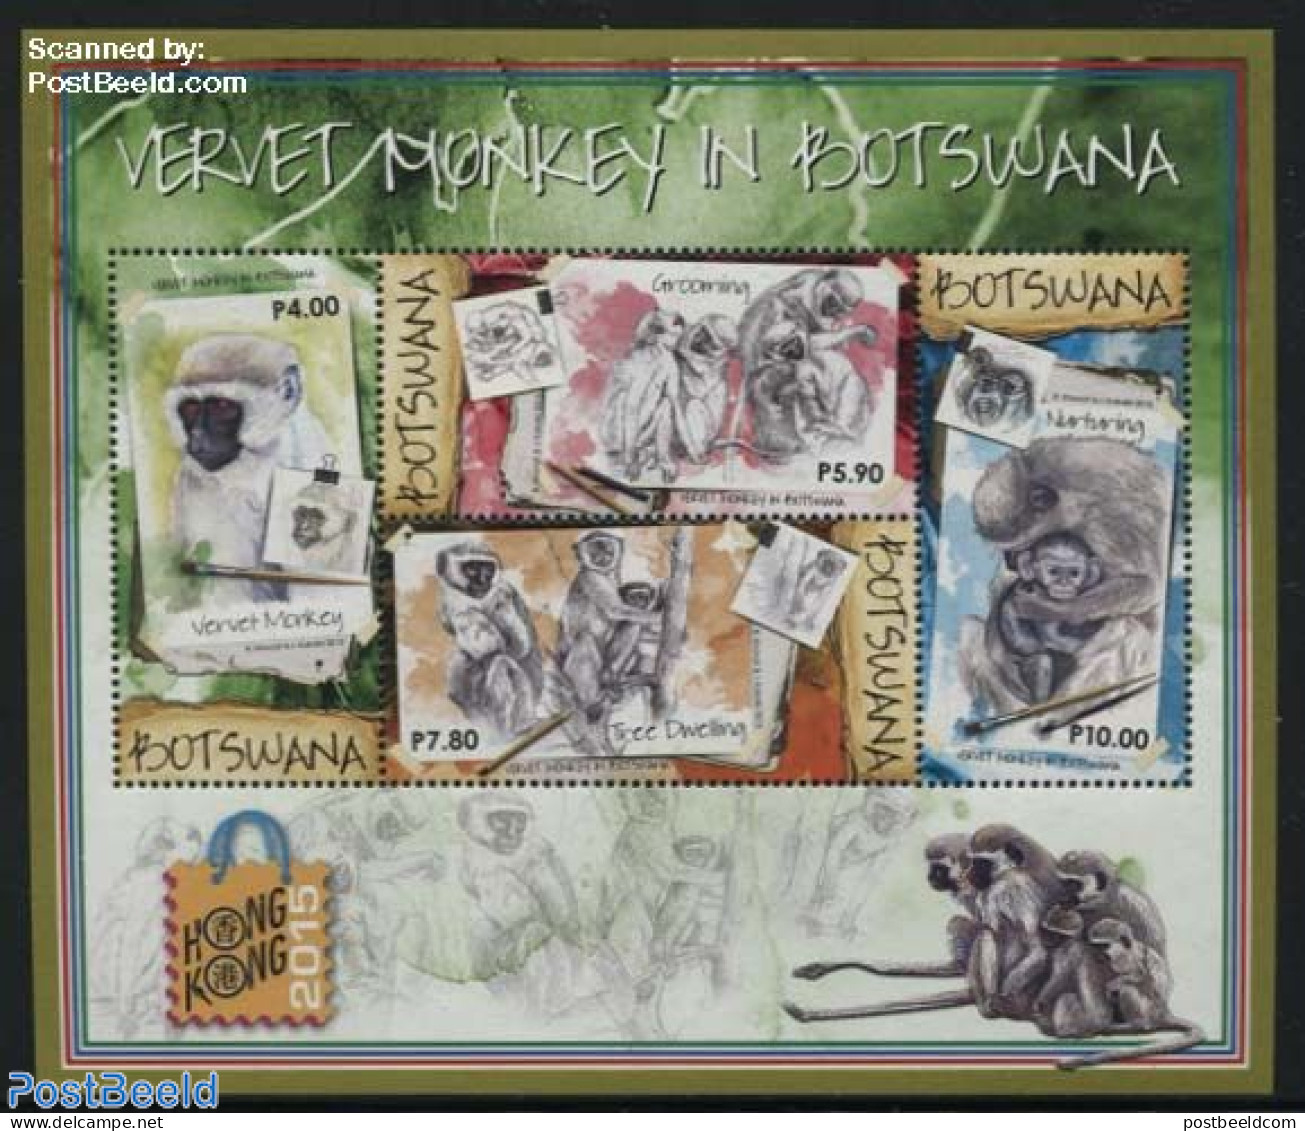 Botswana 2015 Hong Kong, Vervet Monkey In Botswana S/s, Mint NH, Nature - Monkeys - Philately - Art - Paintings - Botswana (1966-...)